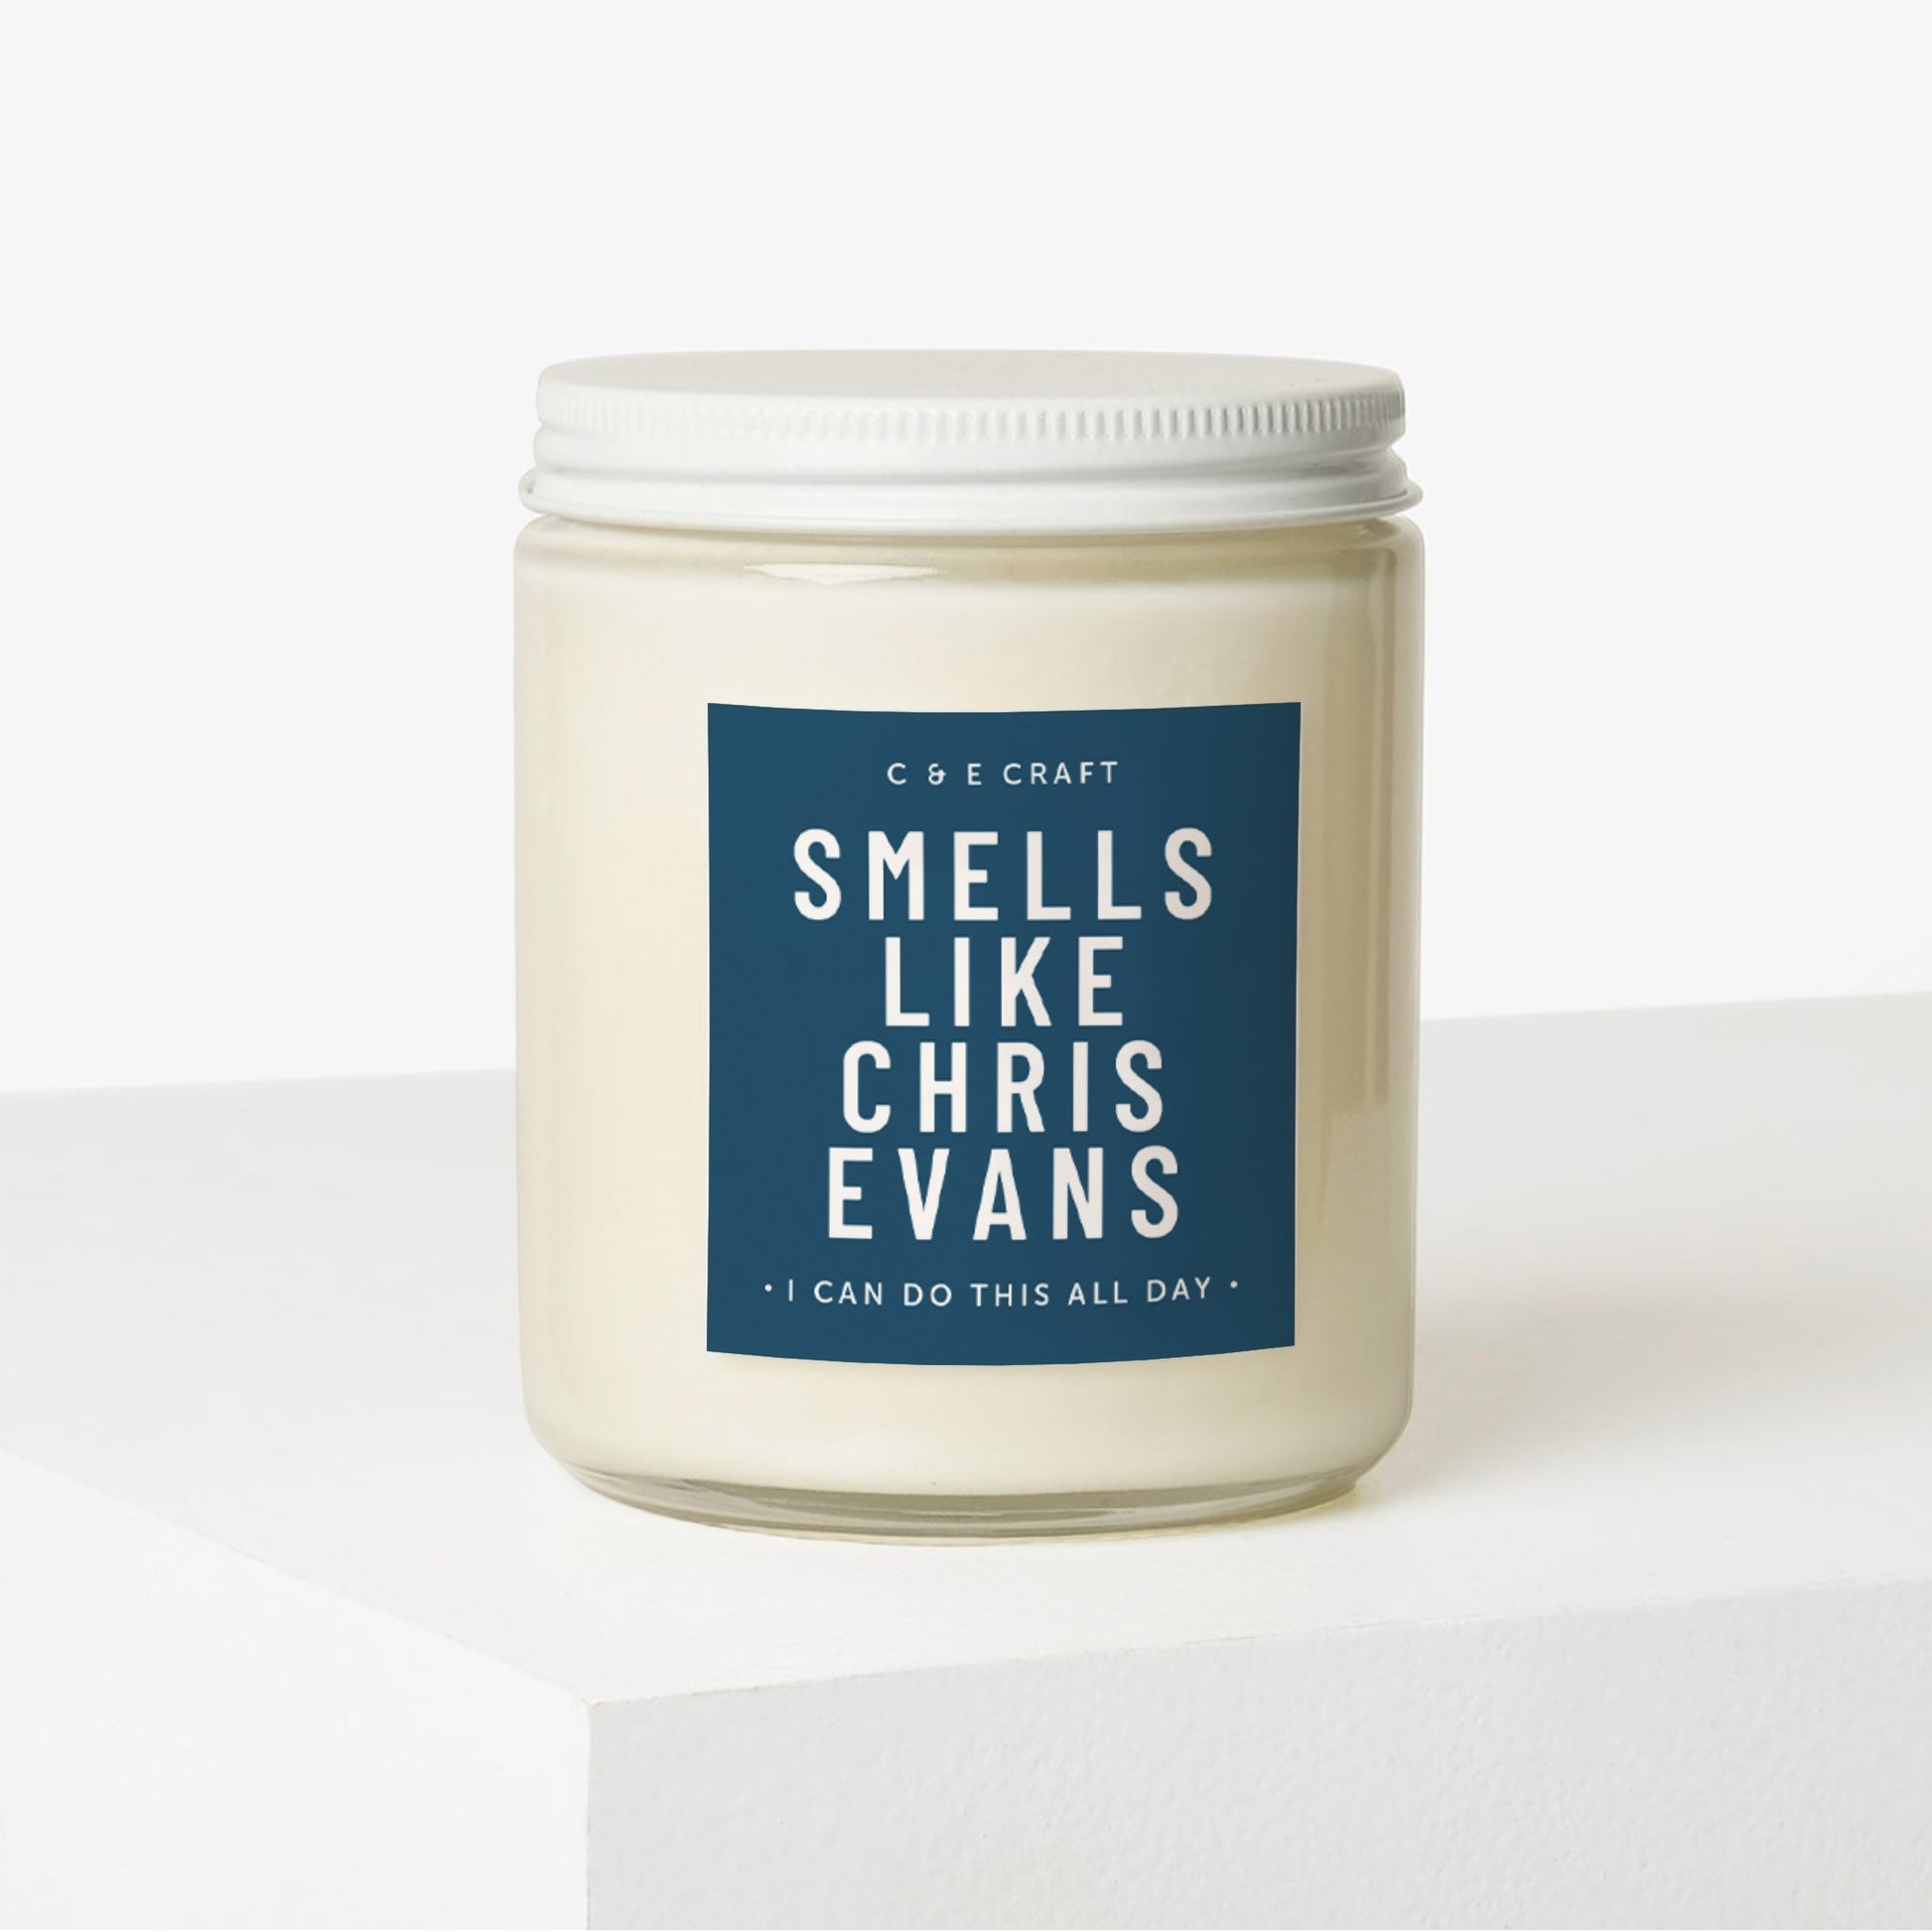 Smells Like Chris Evans Candle C & E Craft Co 